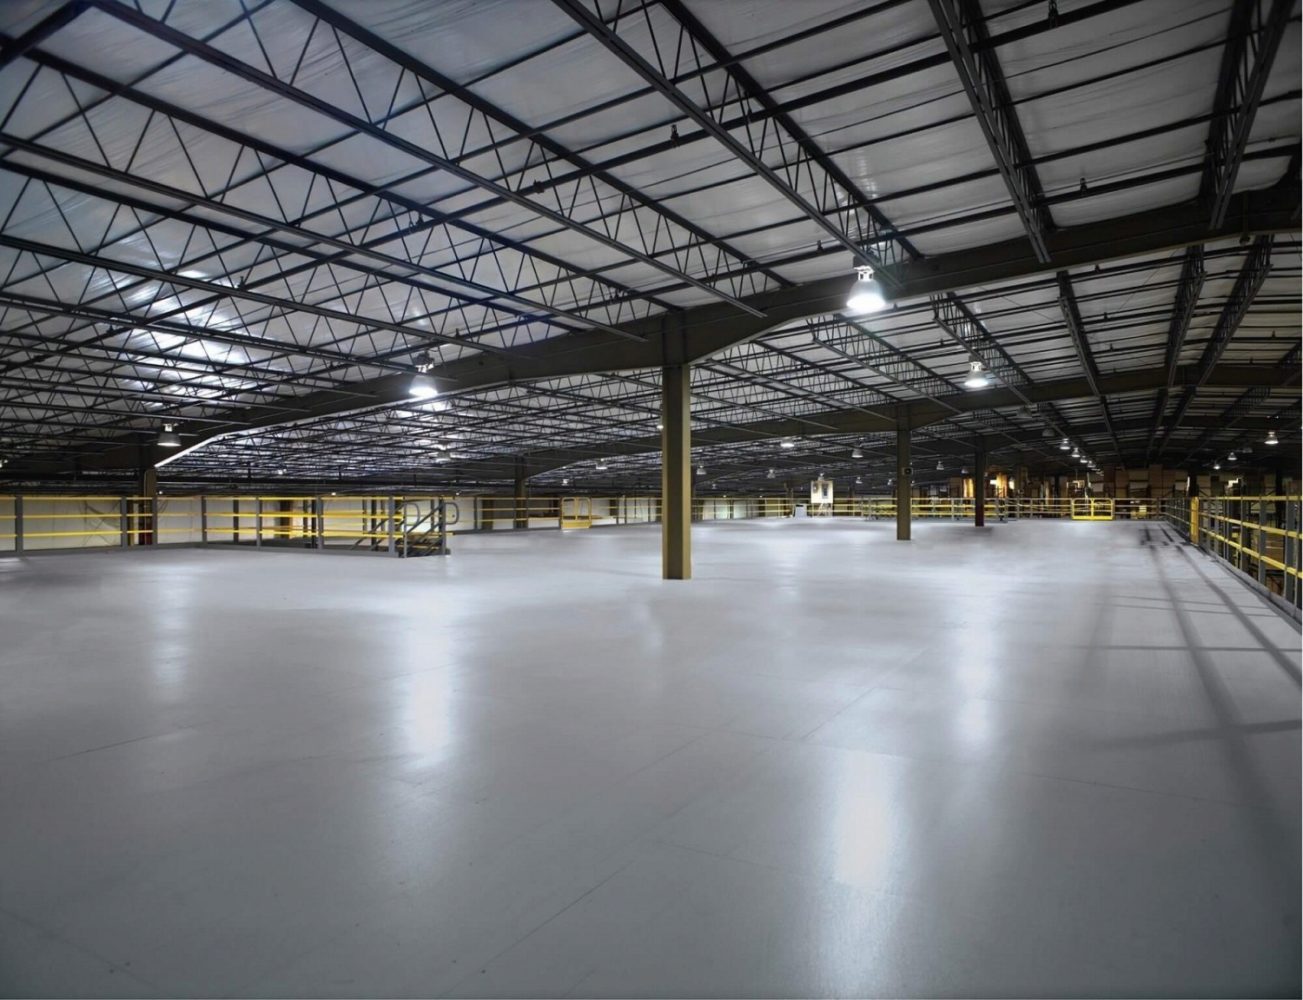 Warehouse Mezzanine Floor